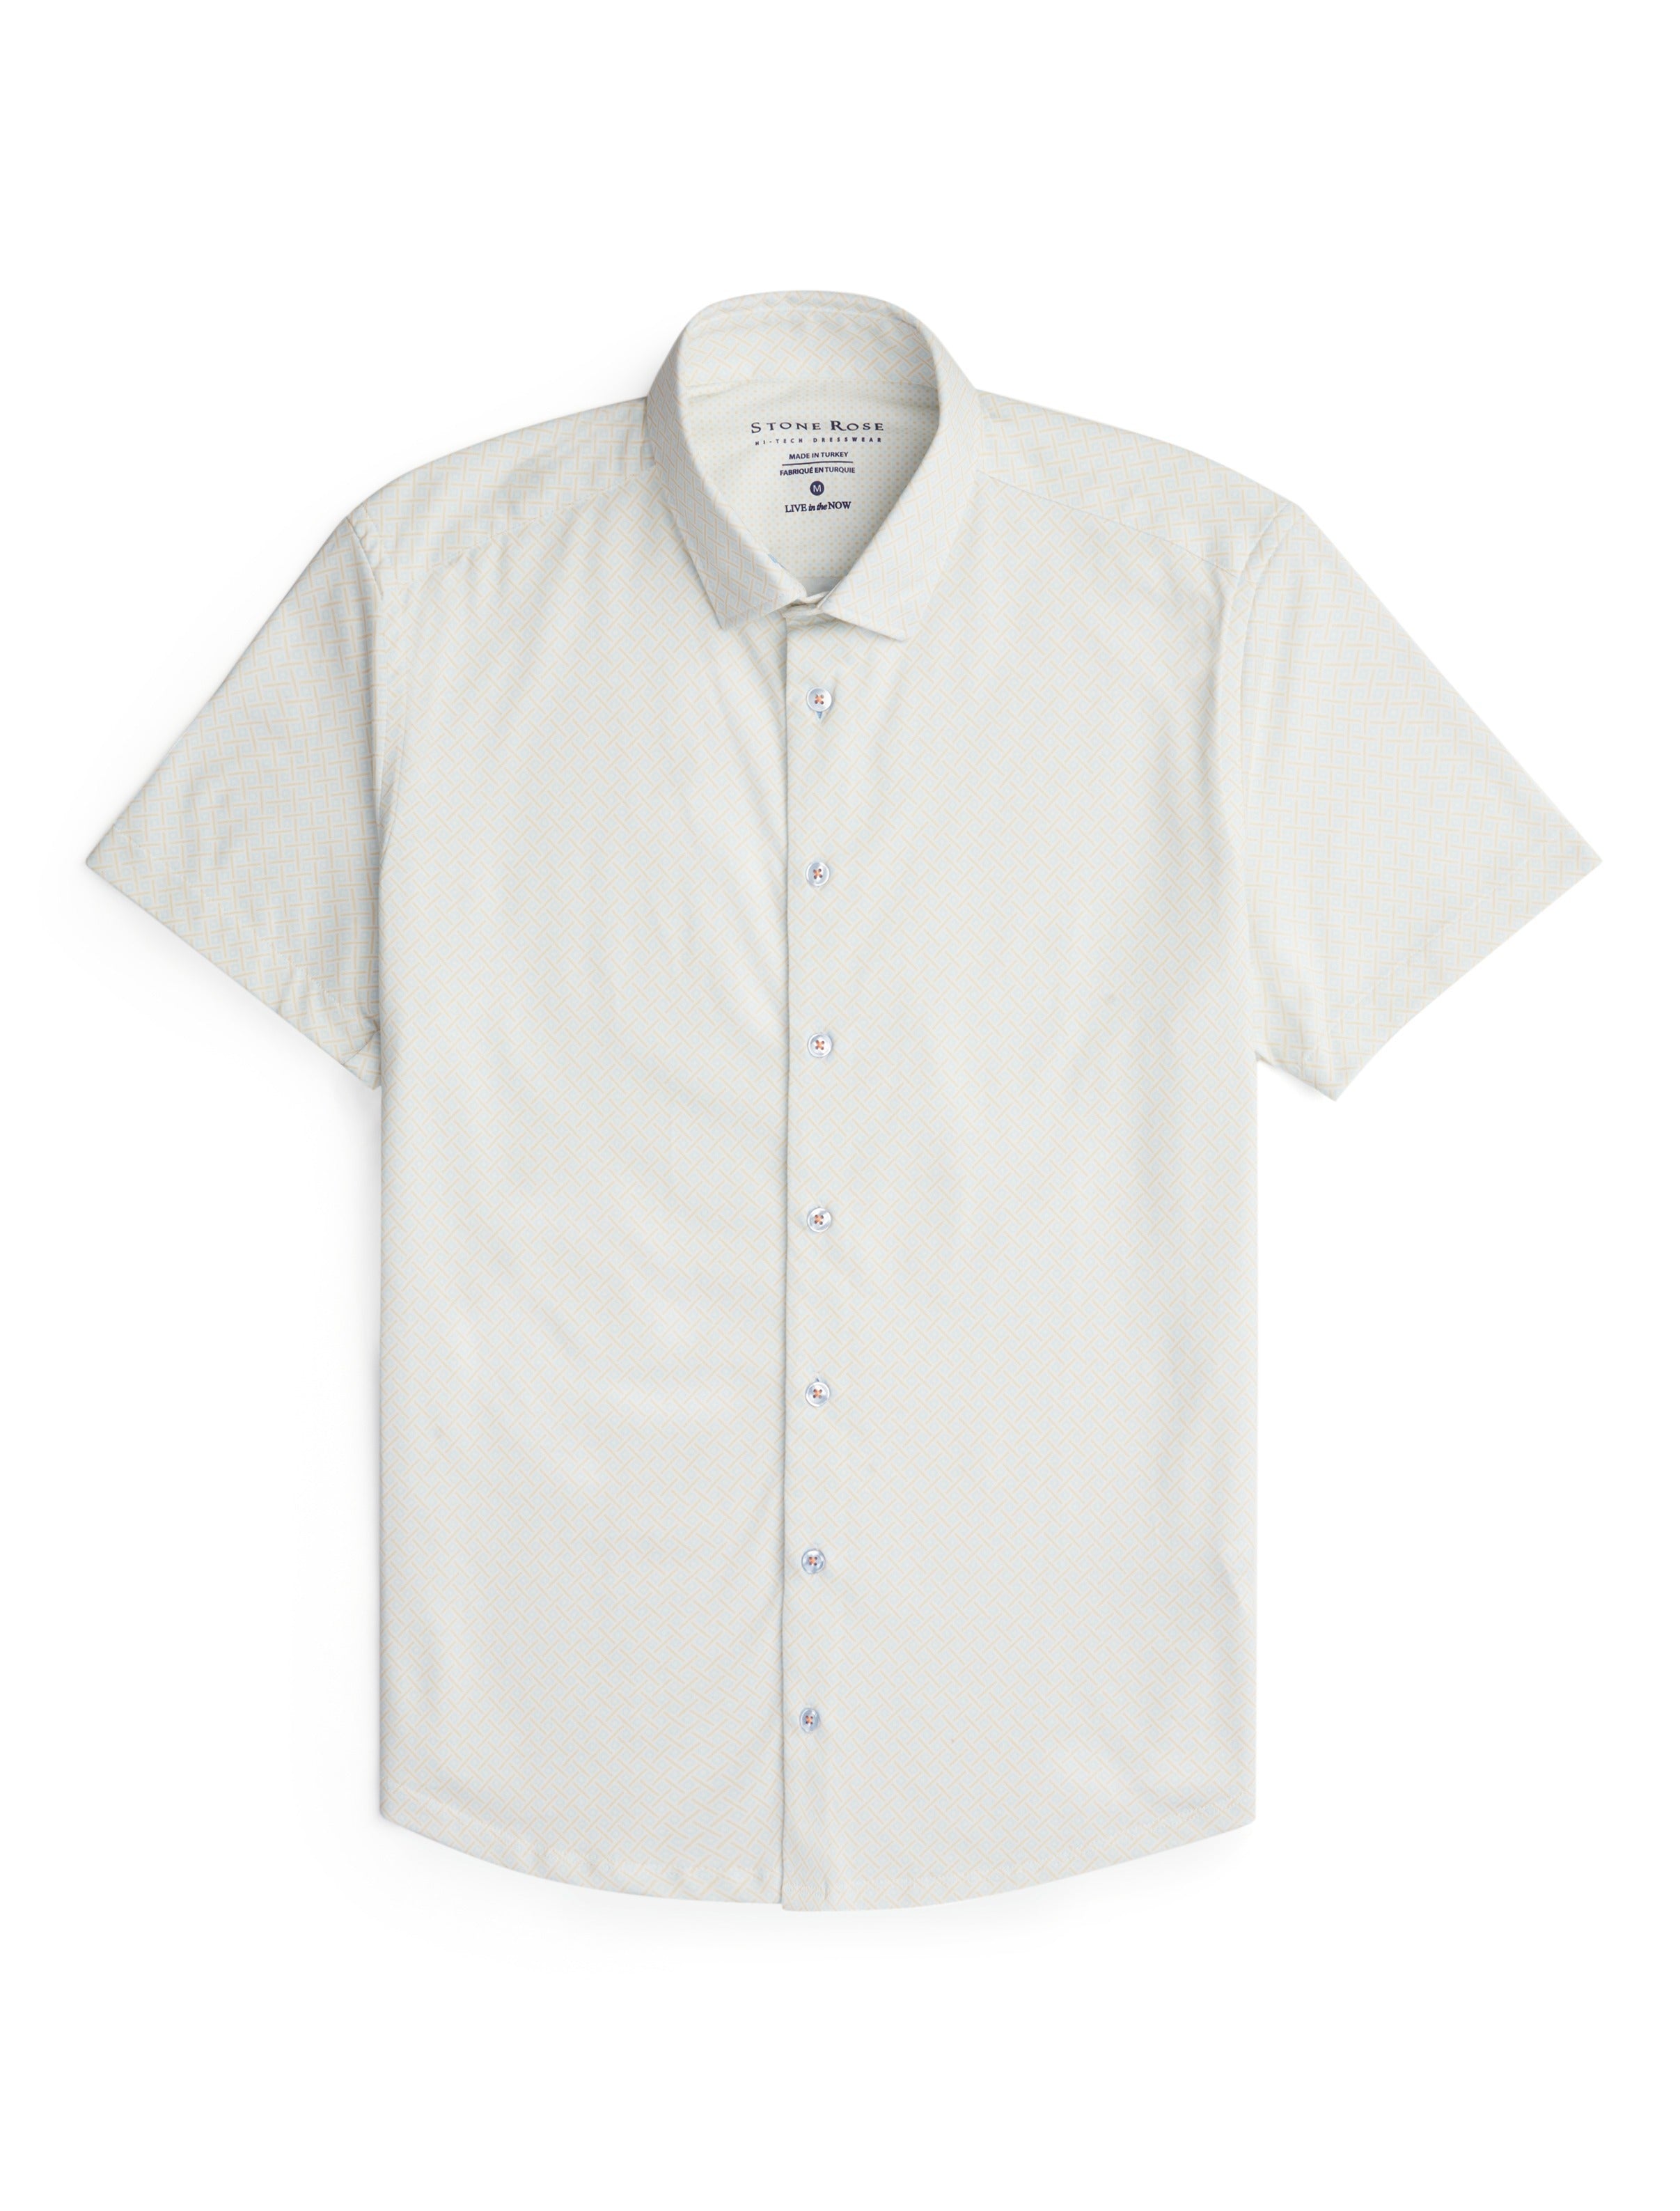 White Square Short Sleeve Print Shirt